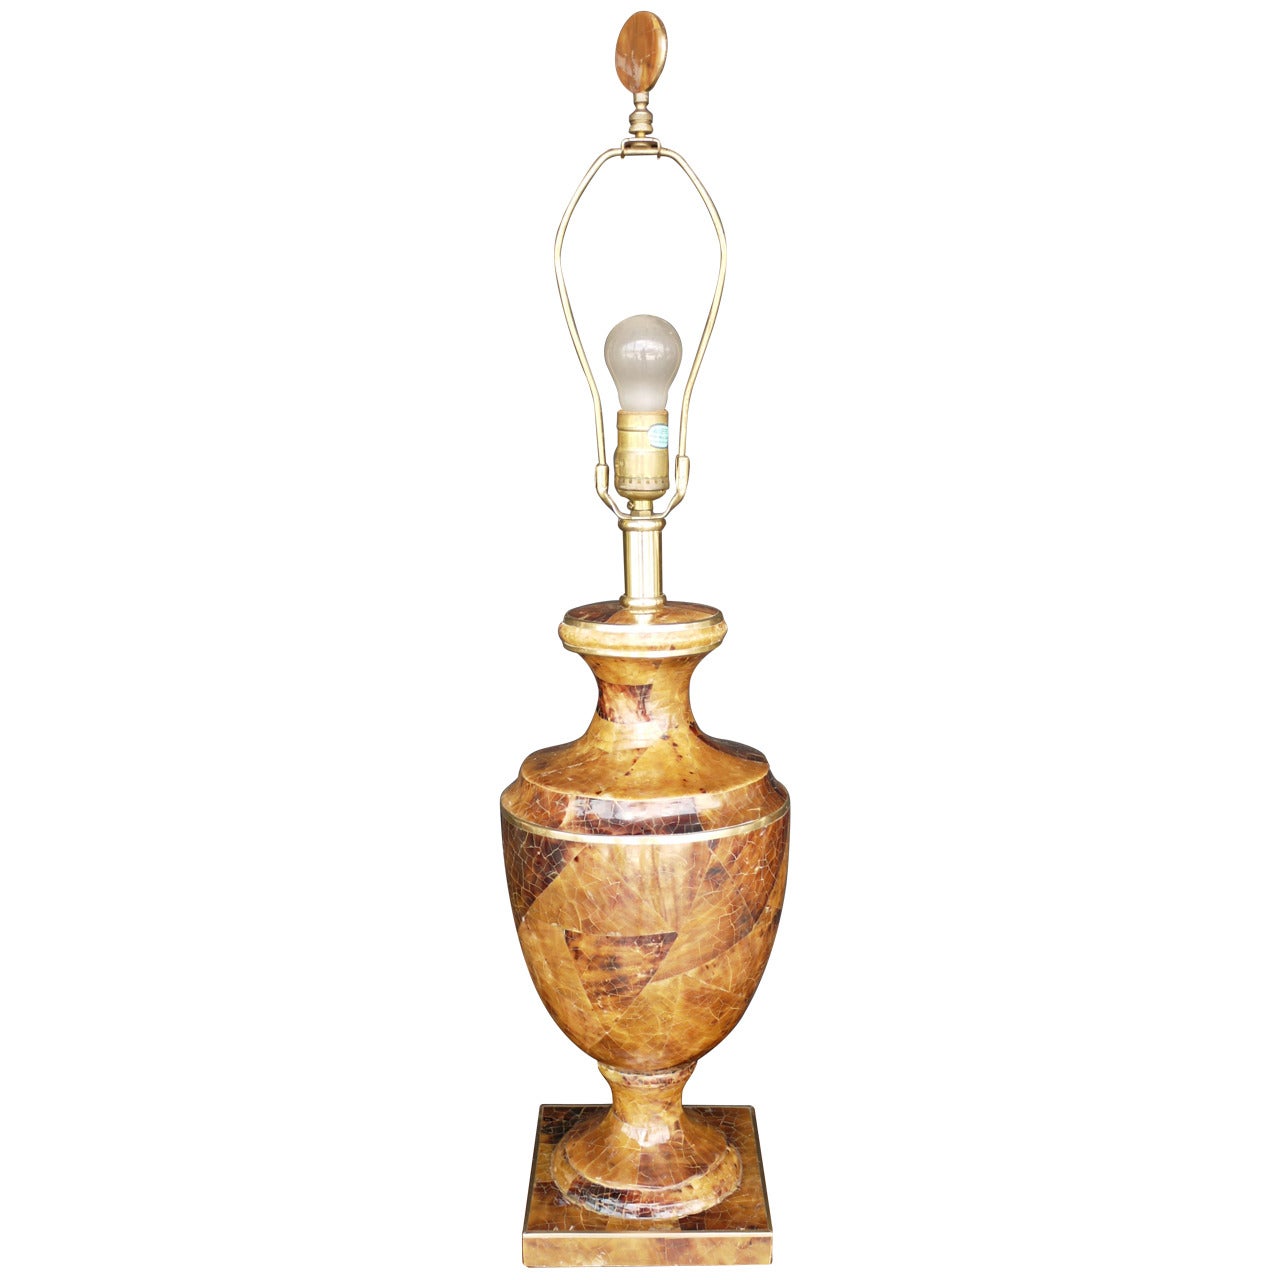 Penshell Urn Shaped Table Lamp